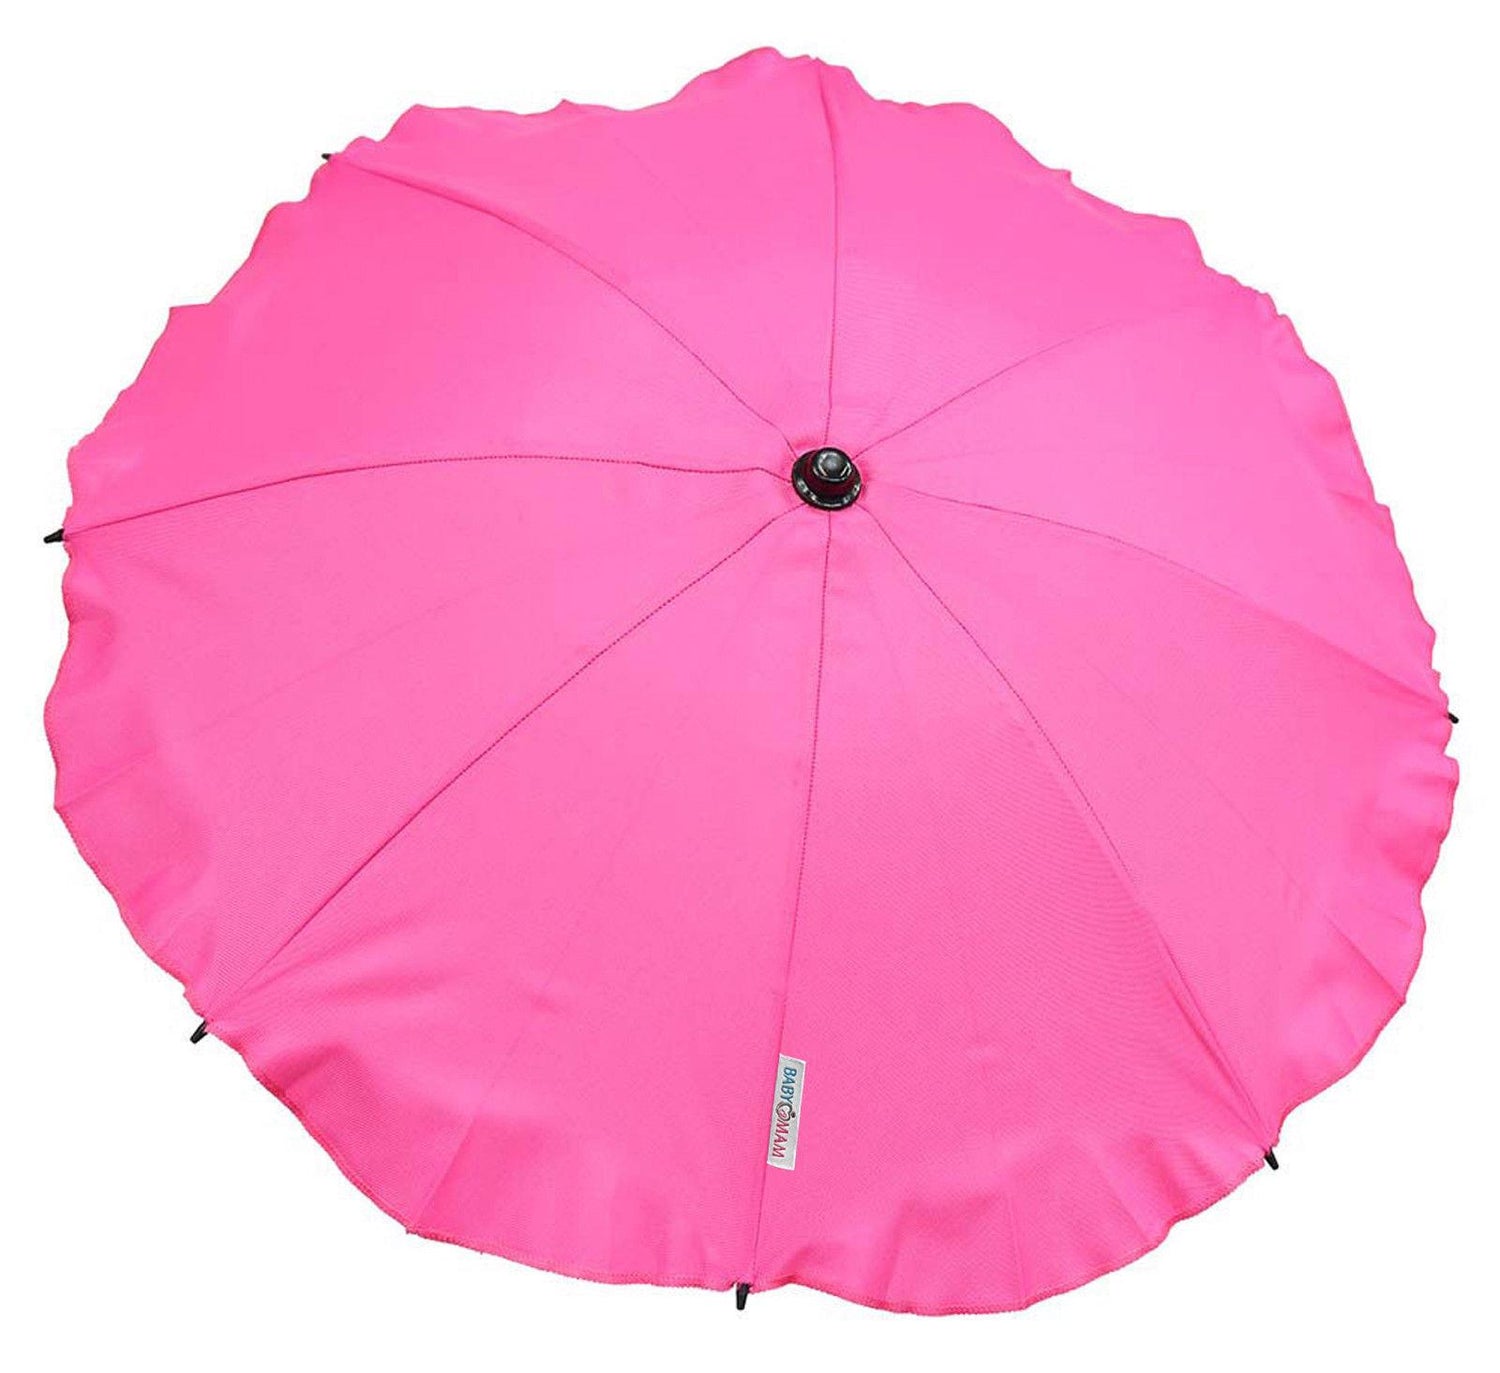 Baby Parasol Universal Sun Umbrella Pram Stroller Canopy Protect From Sun Rain Pink